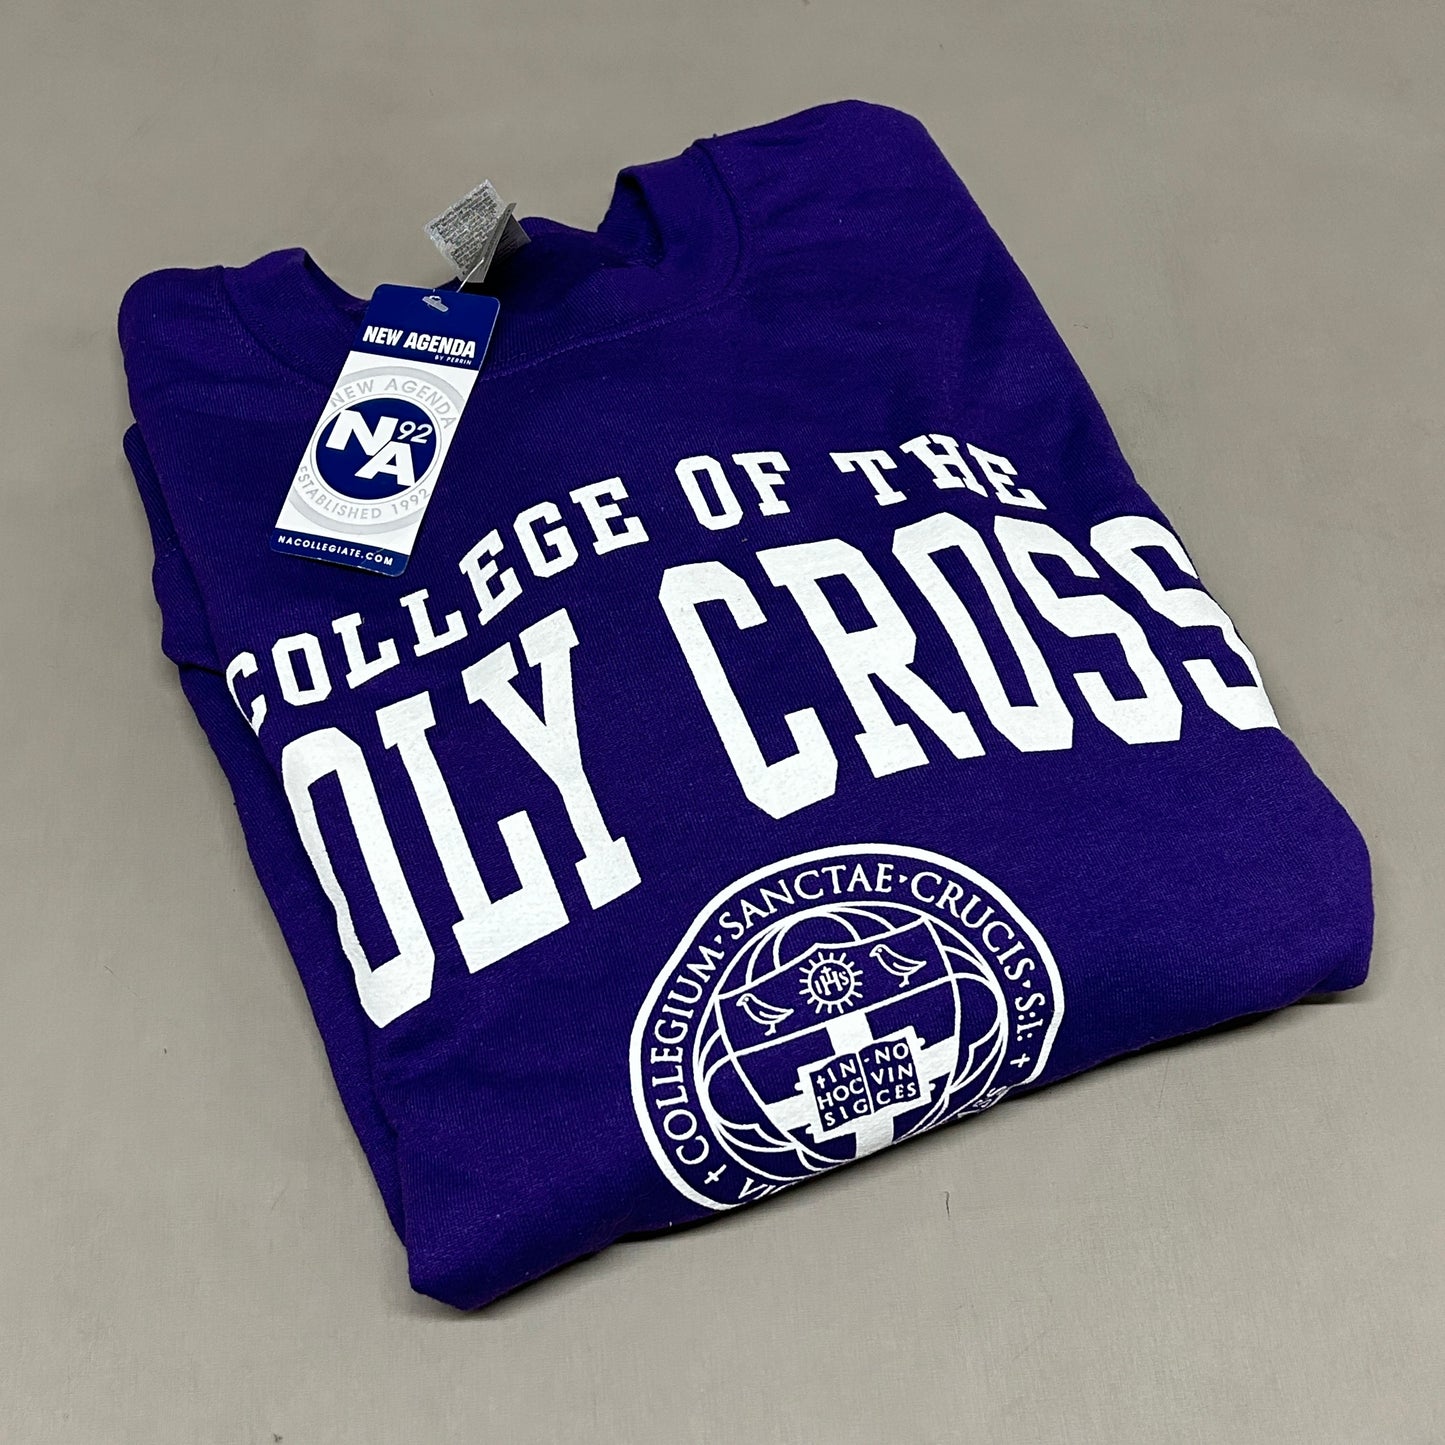 GILDAN College of the Holy Cross Heritage Heavy Cotton Crewneck Sz L Purple (New)